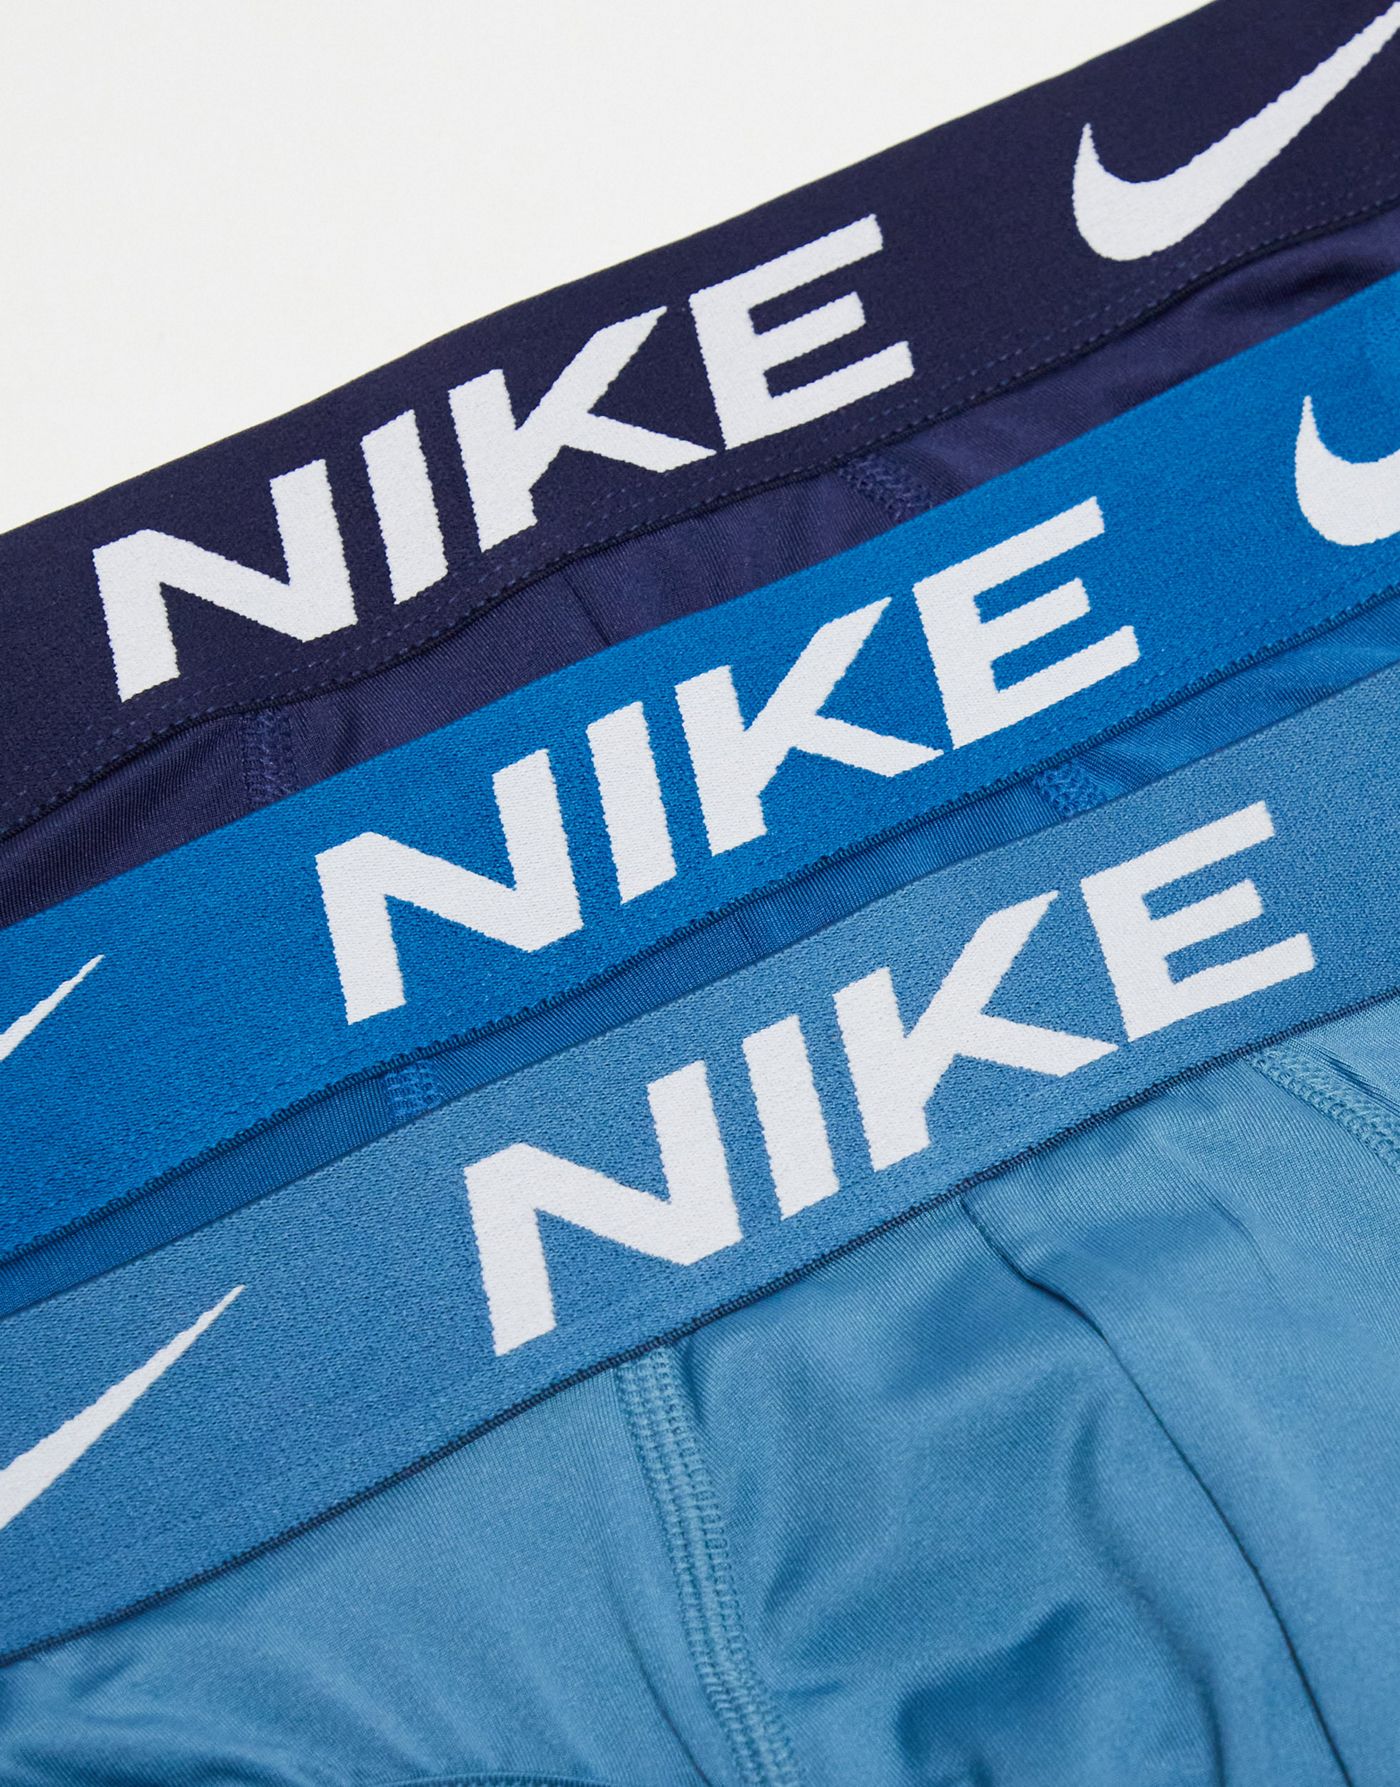 Nike Dri-Fit Essential Microfiber hip briefs 3 pack in navy/blue